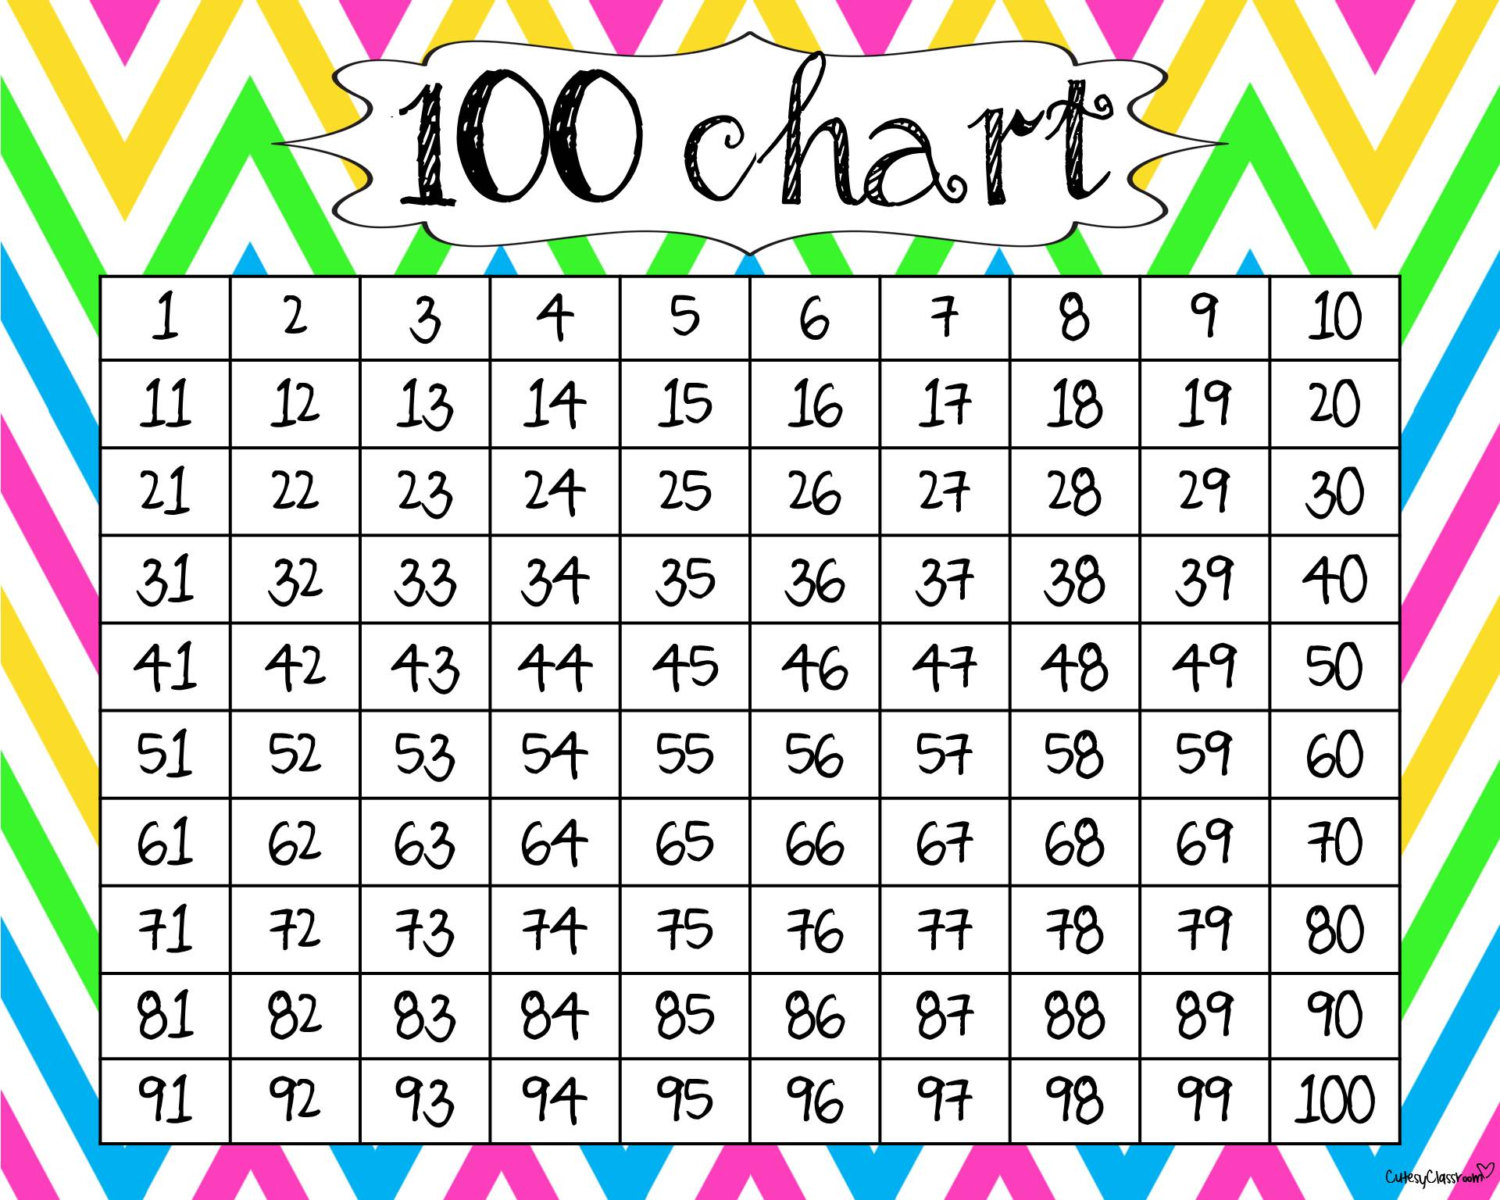 Free Printable 100 Chart - FreePrintableTM.com | FreePrintableTM.com